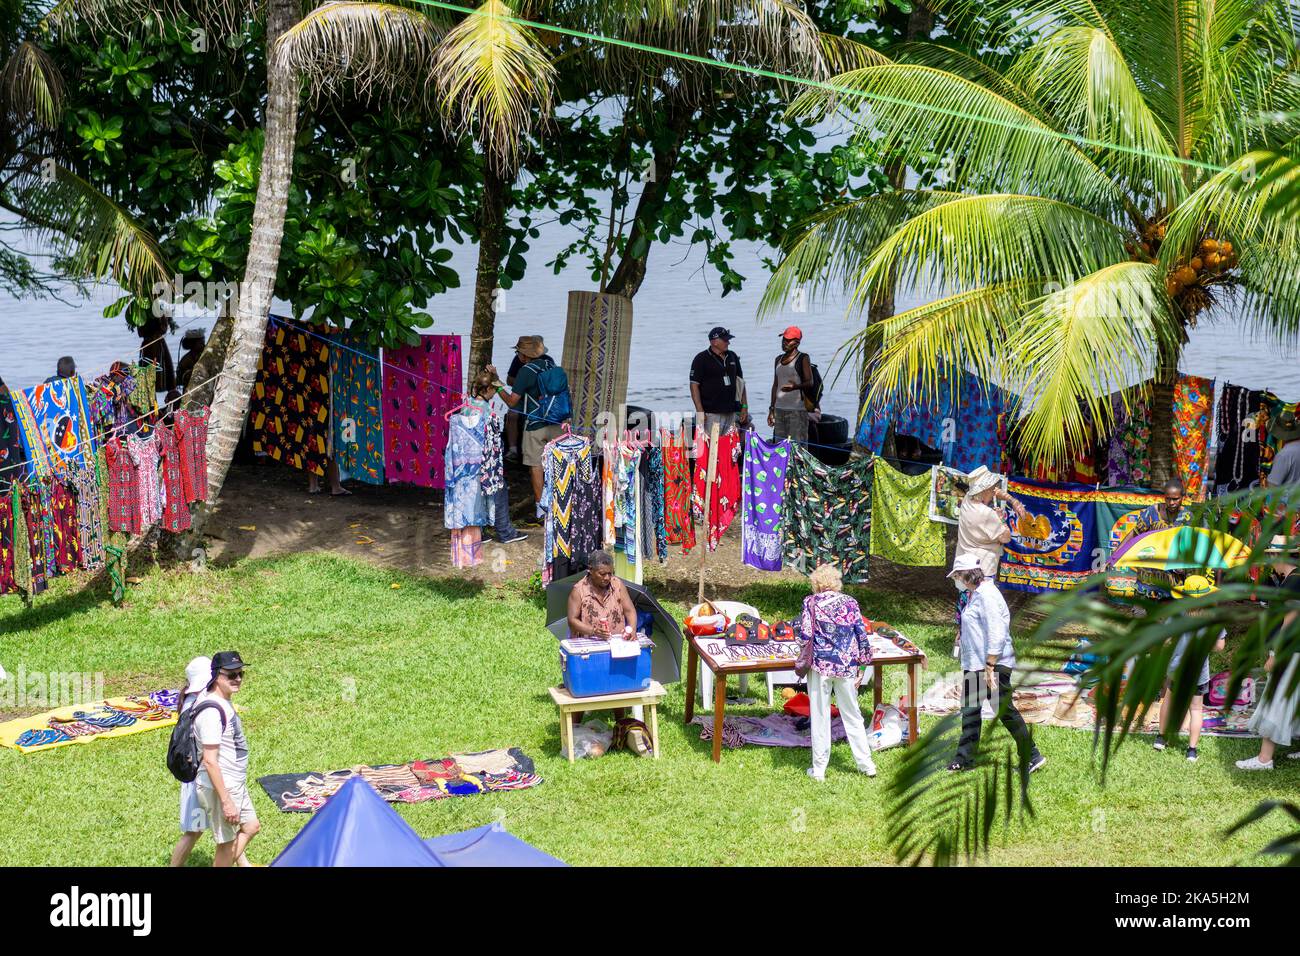 Stalli che vendono ed espongono vari artigianato artigianale Alotau Cultural Festival, Alotau, Milne Bay Province, Papua Nuova Guinea Foto Stock